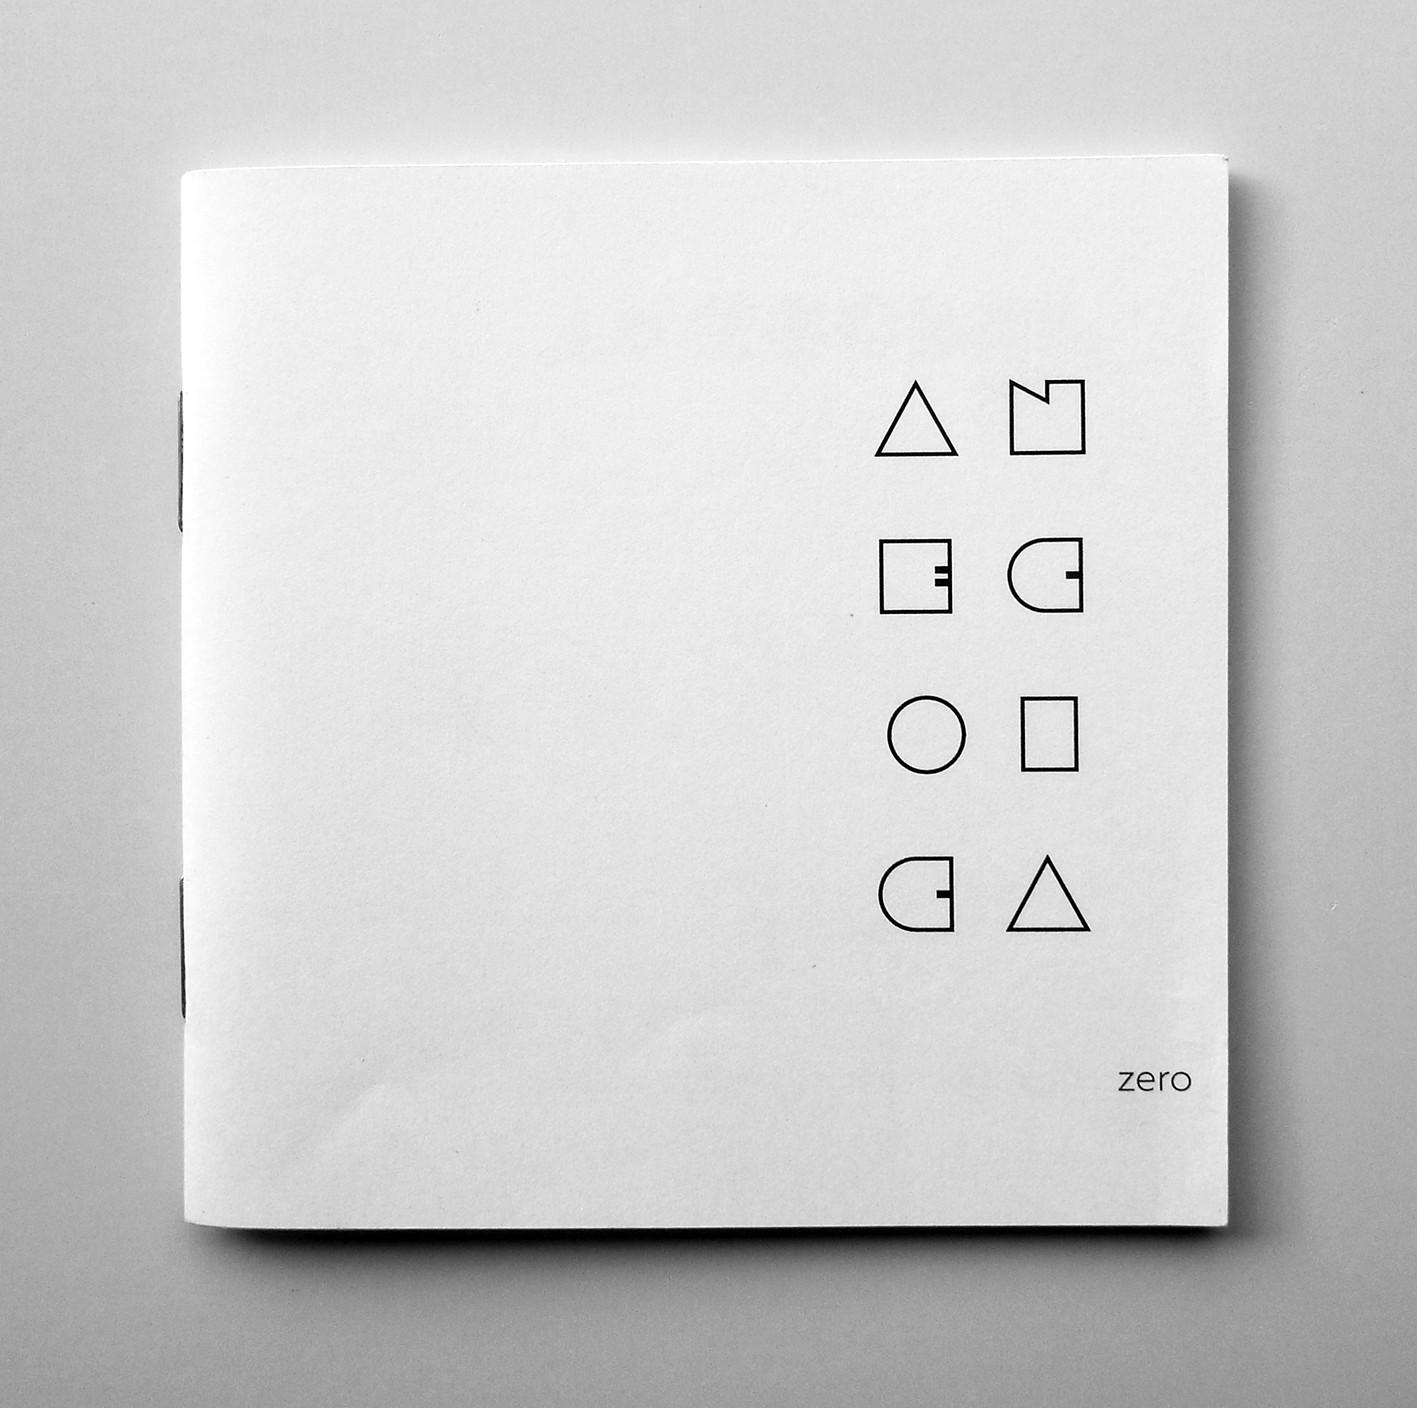 anecoica2014-capa-pb.jpg